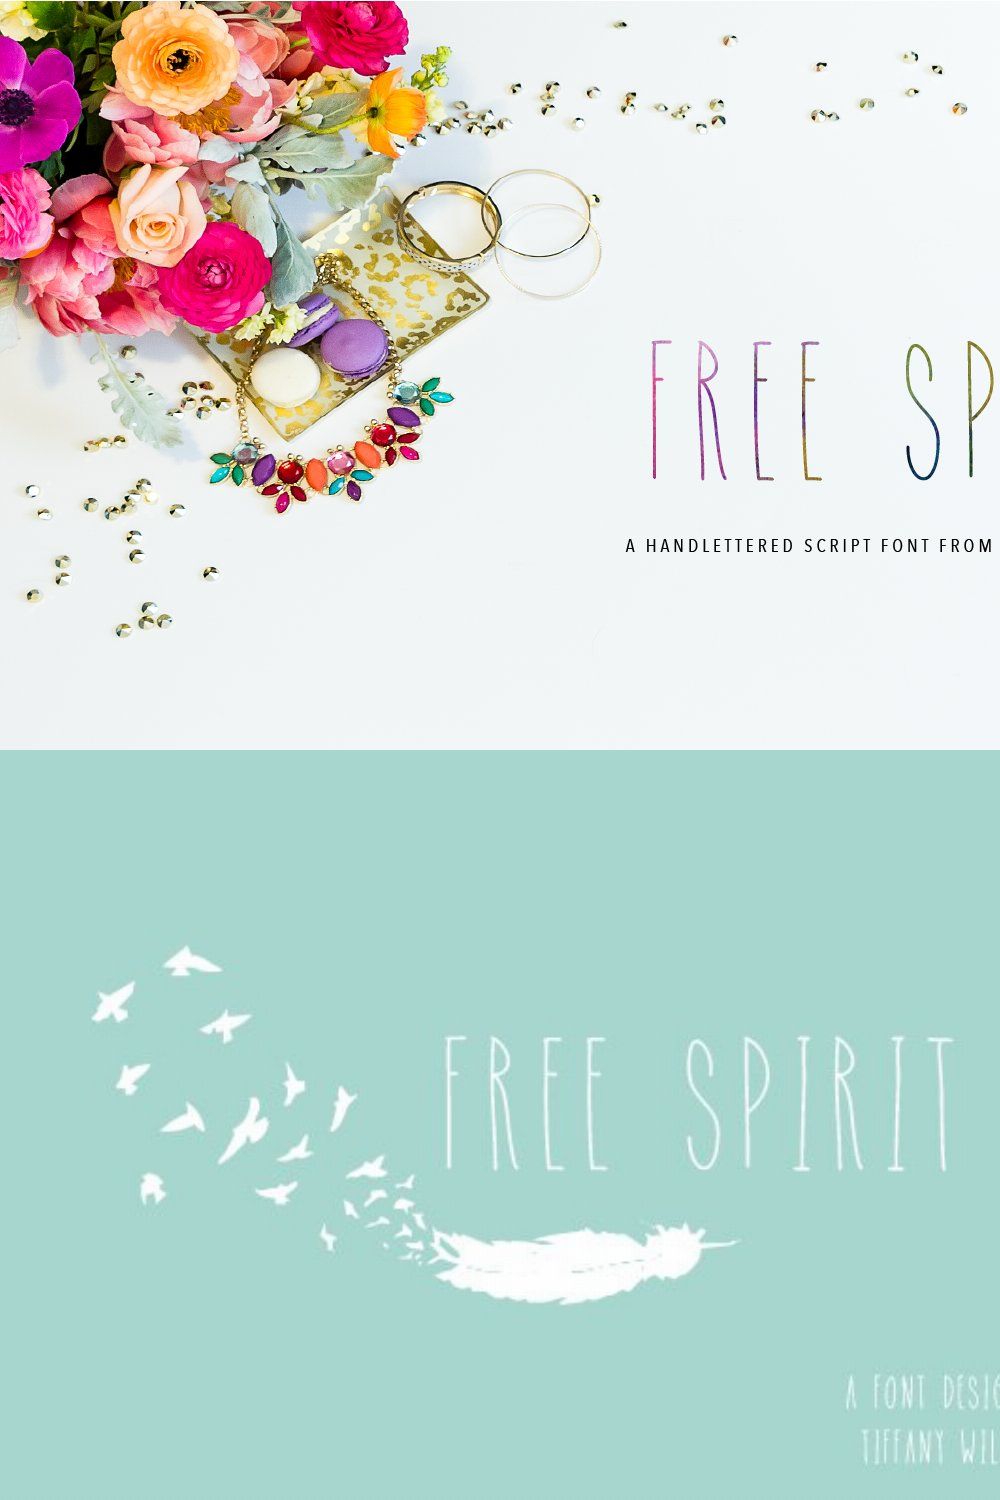 Free Spirit pinterest preview image.